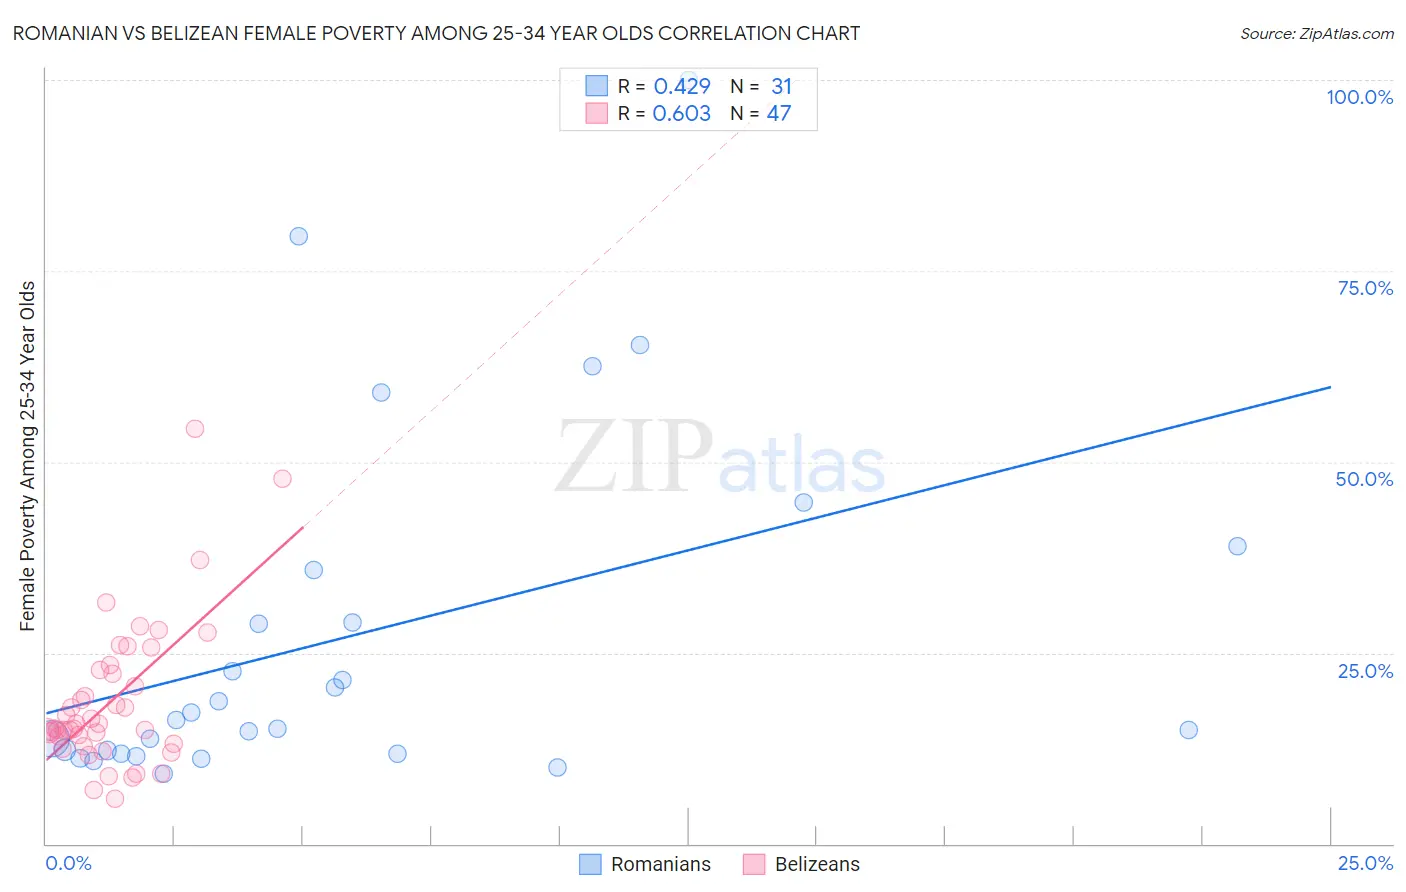 Romanian vs Belizean Female Poverty Among 25-34 Year Olds